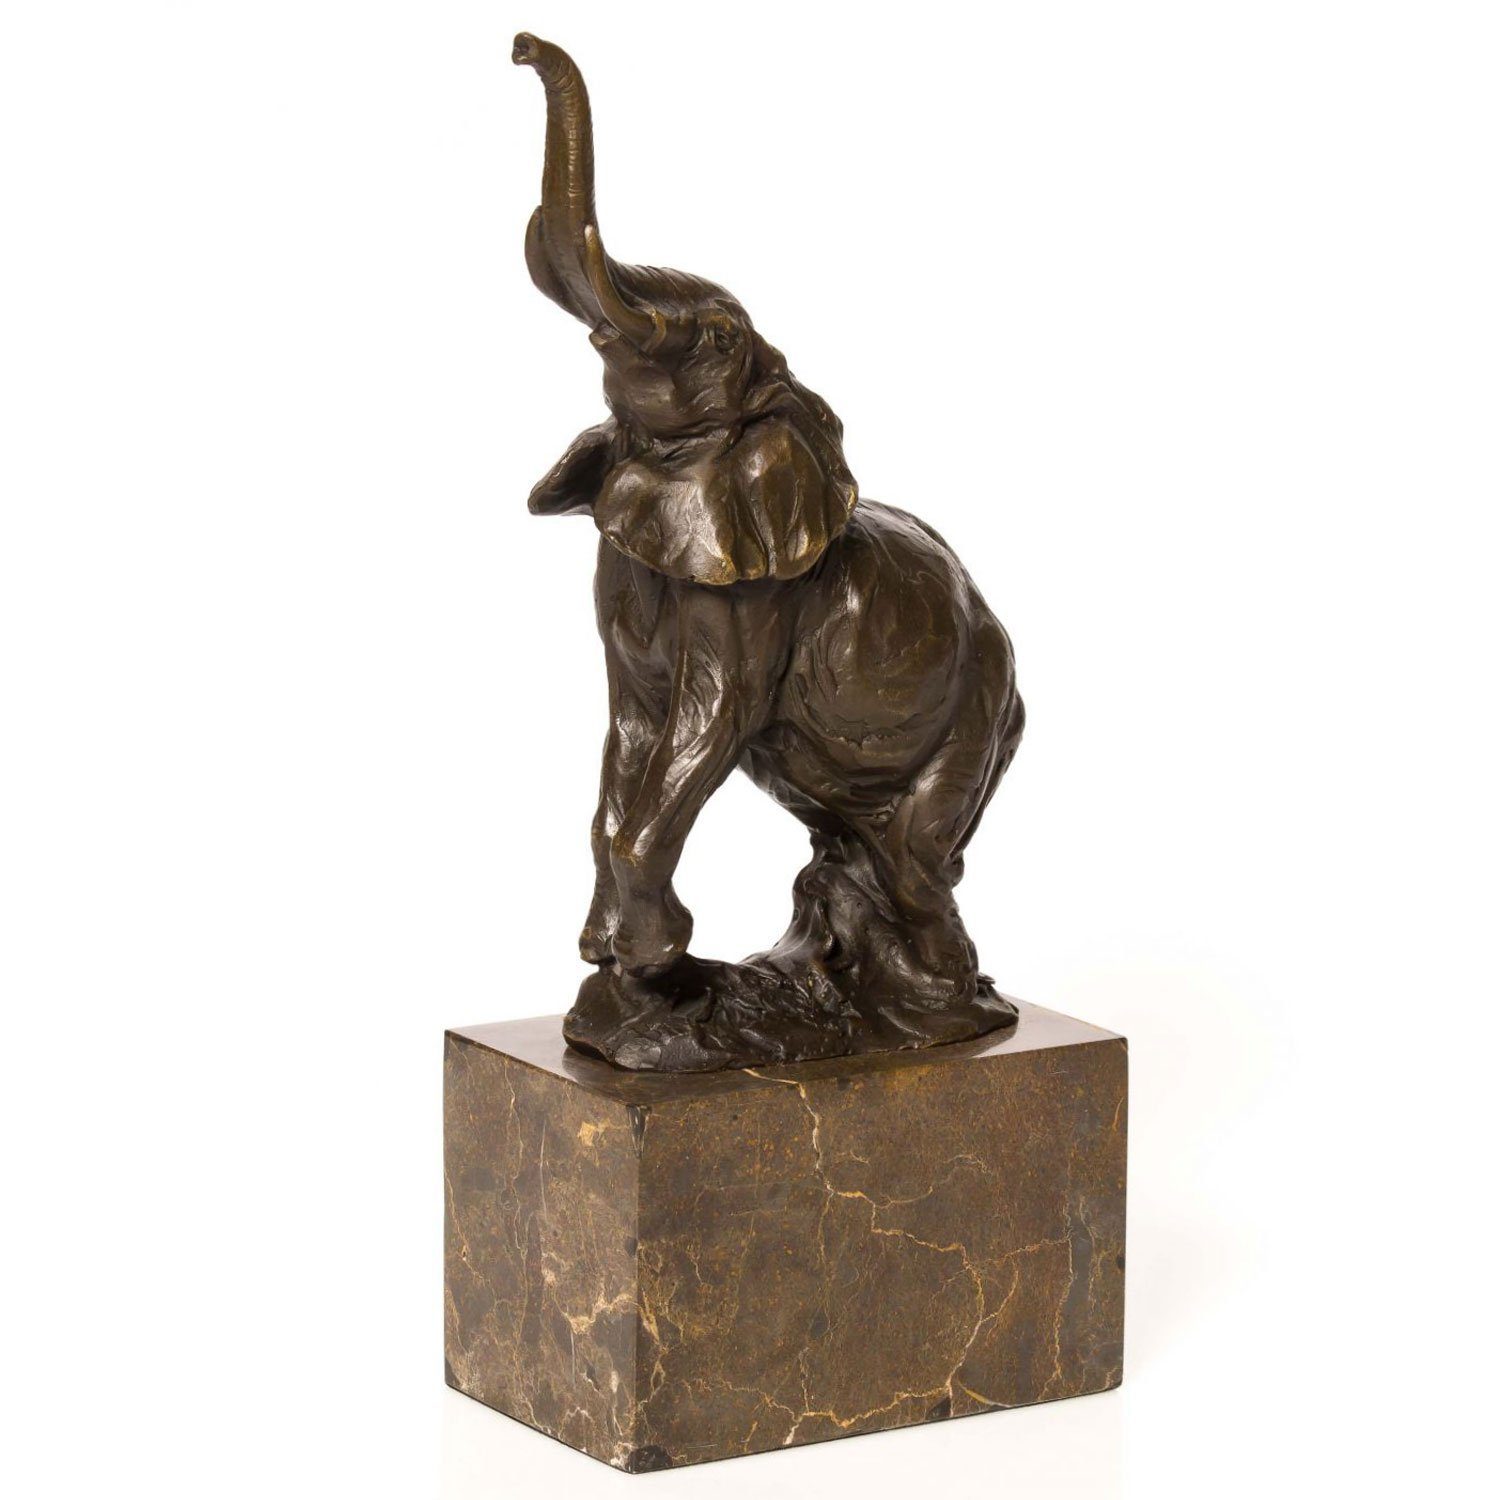 Aubaho Skulptur Bronzeskulptur Elefant Bronze Figur Statue Antik-Stil 30cm